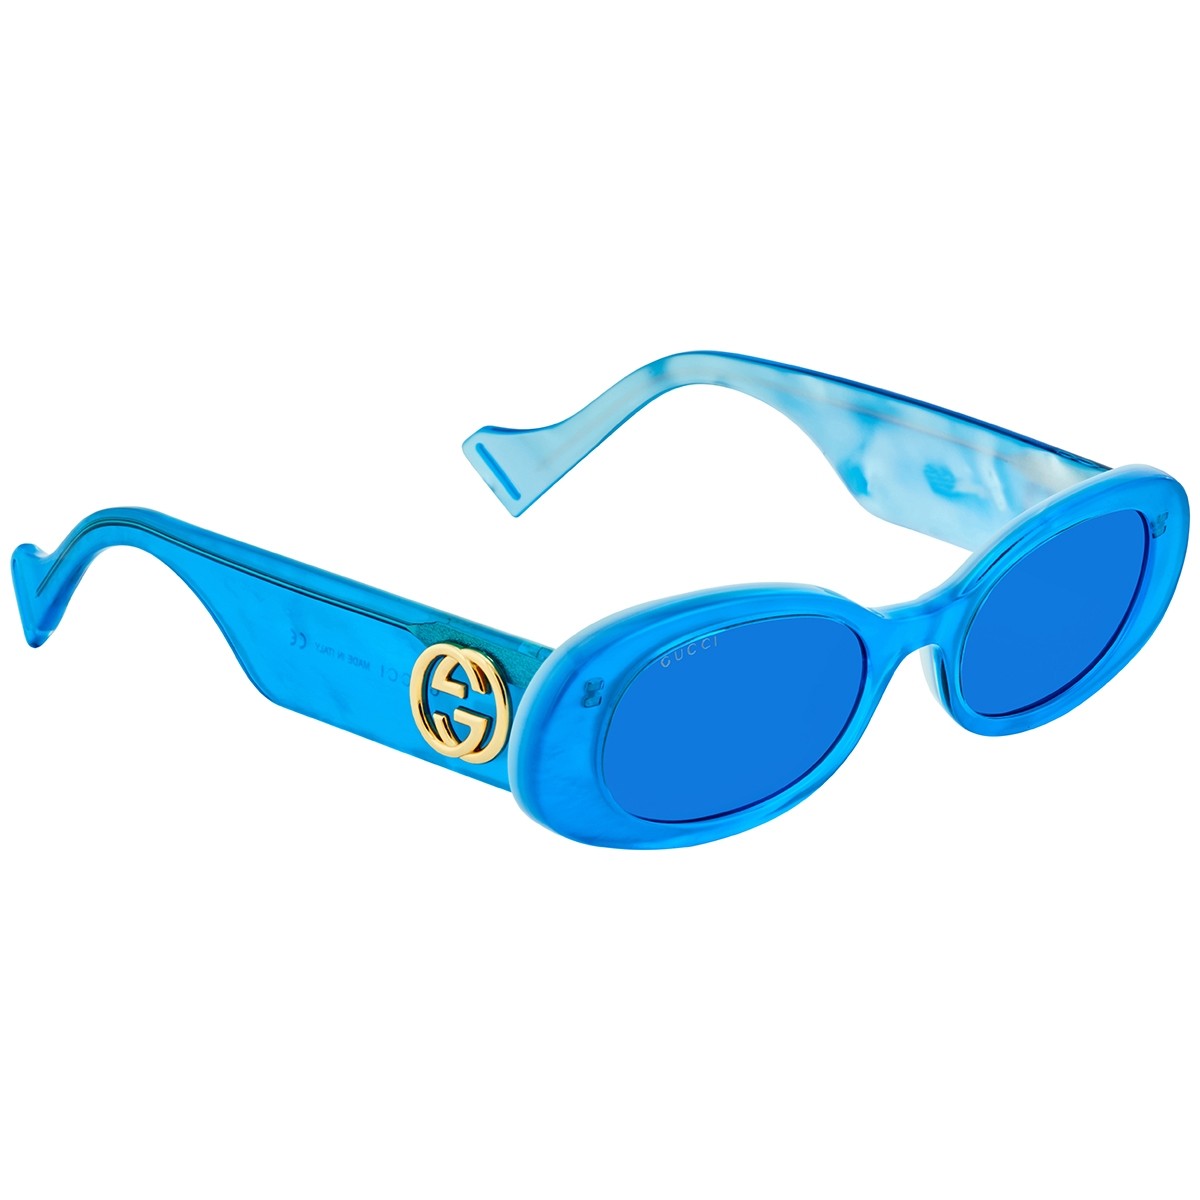 Gucci Blue Oval Ladies Sunglasses GG0517S 006 52